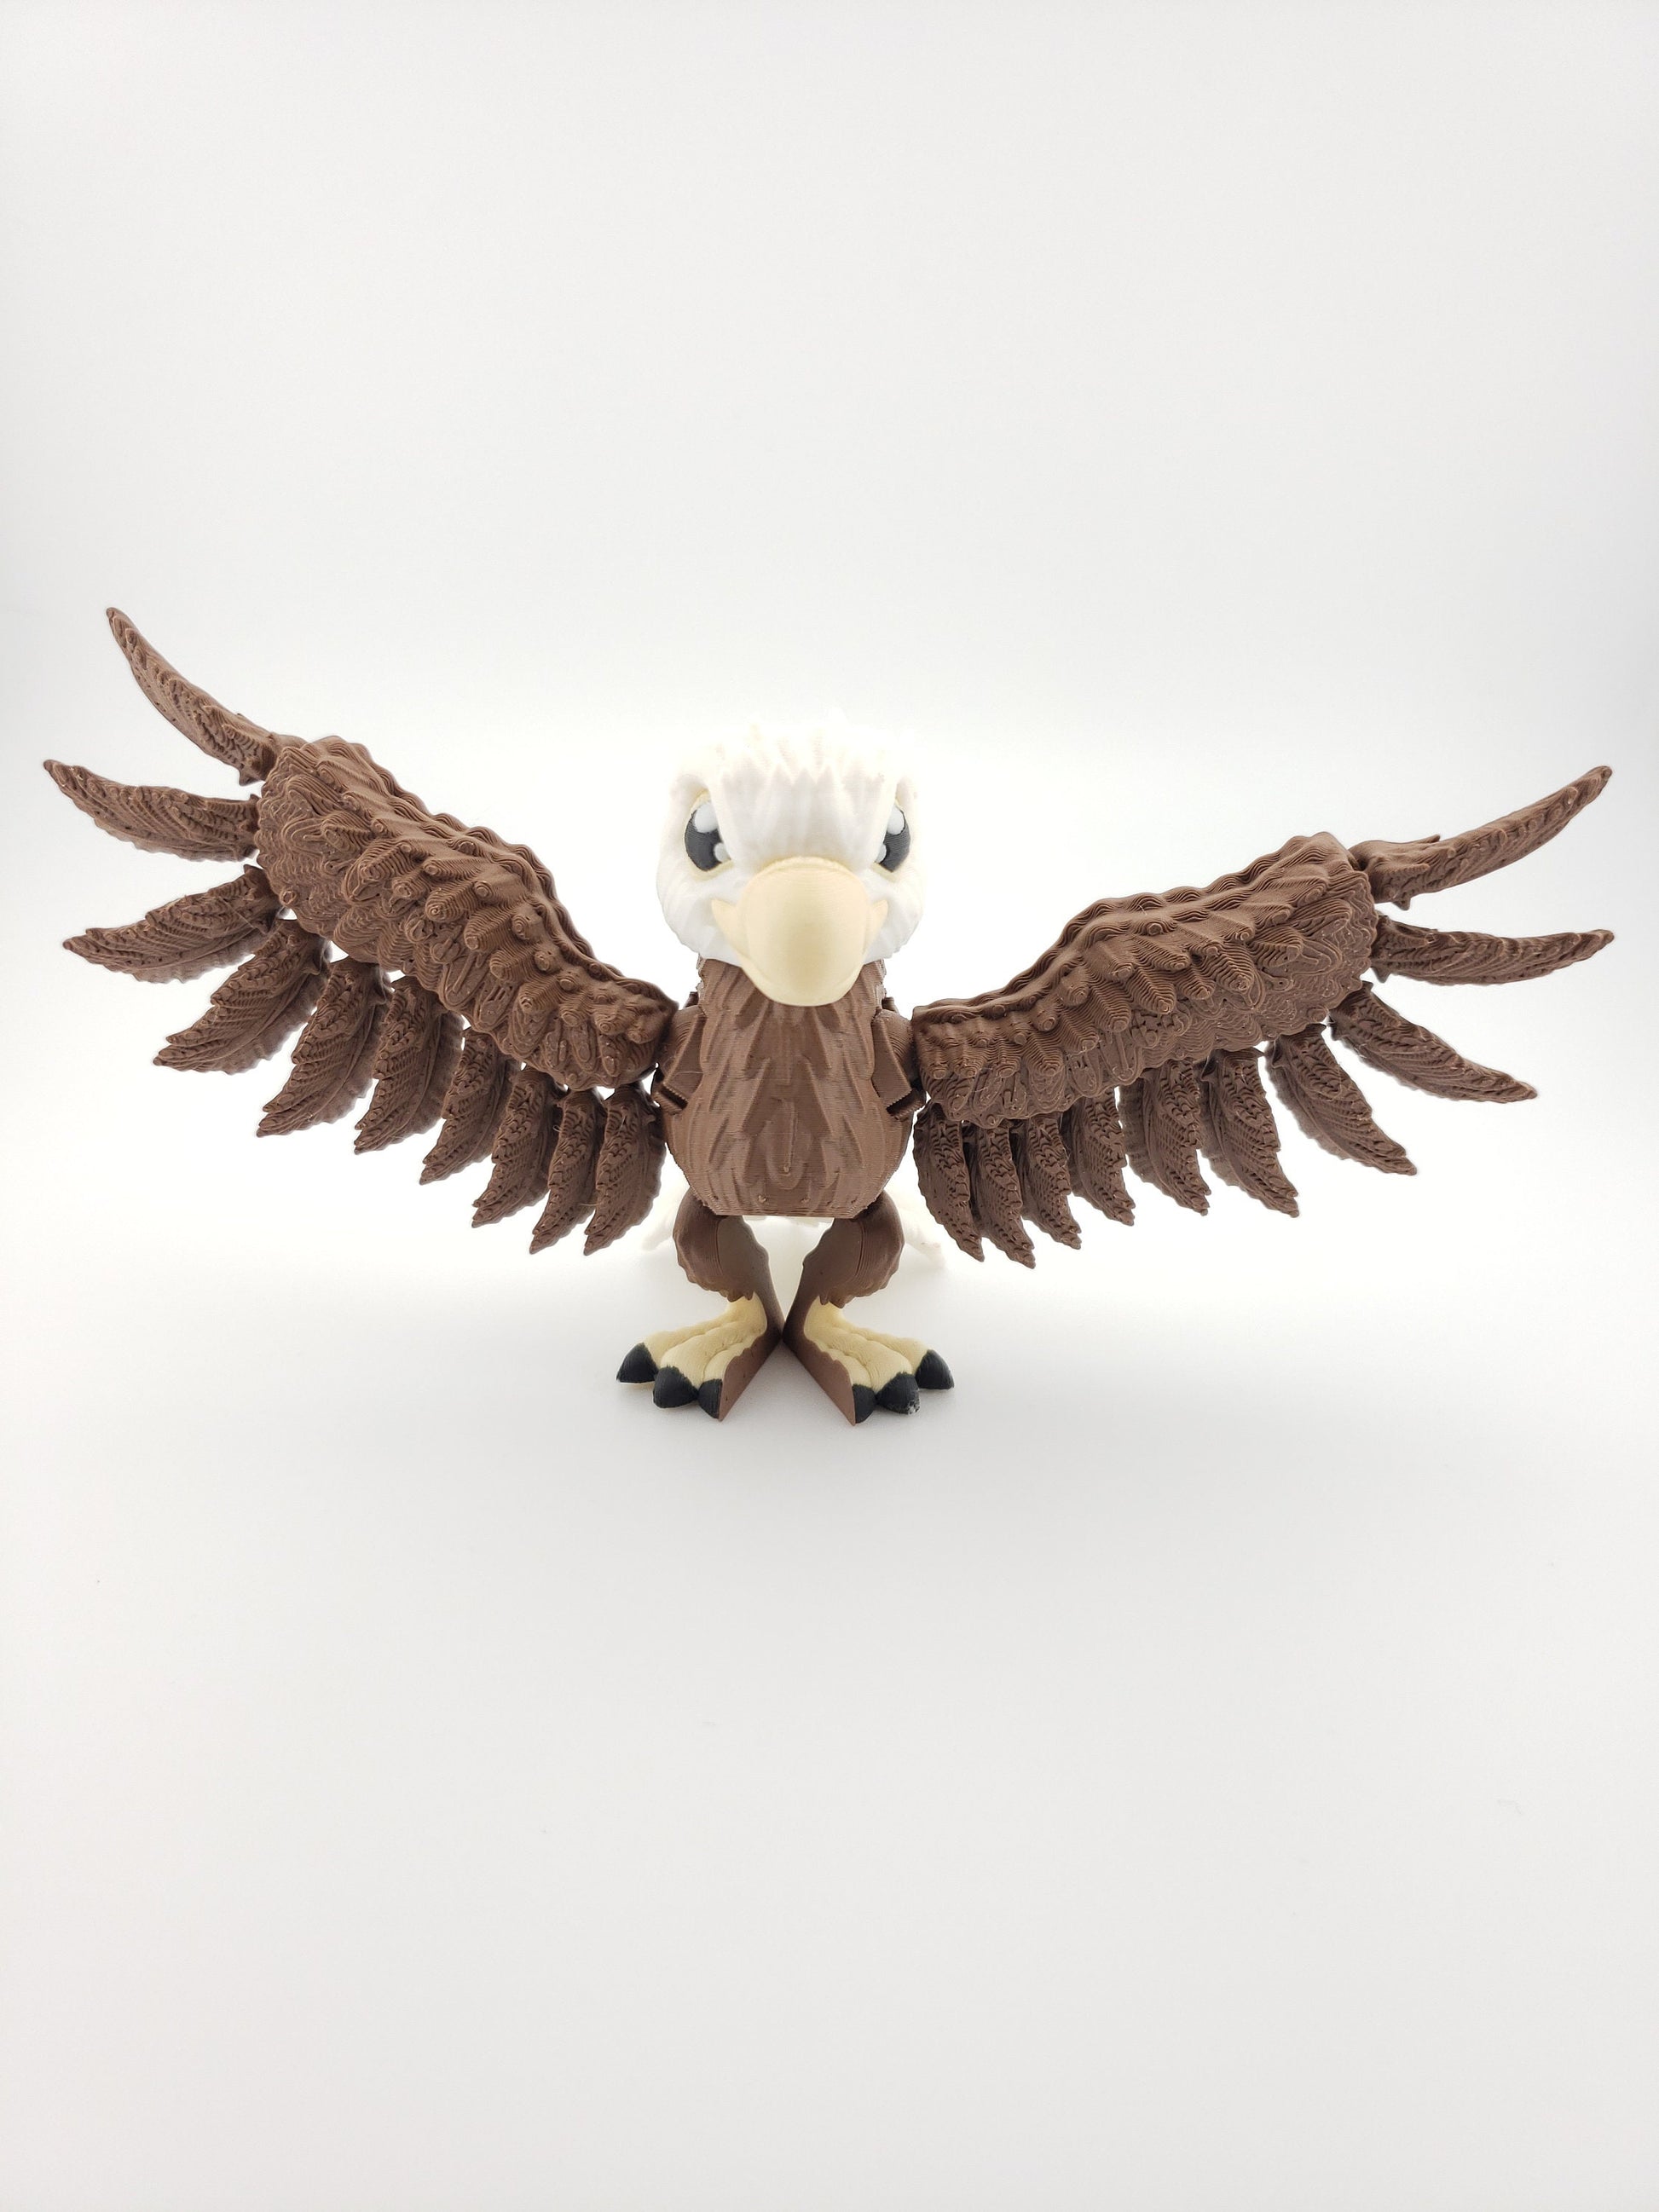 Flexi Eagle - 3D Printed Fidget Fantasy Creature - Authorized Seller - Articulated Toy Figure